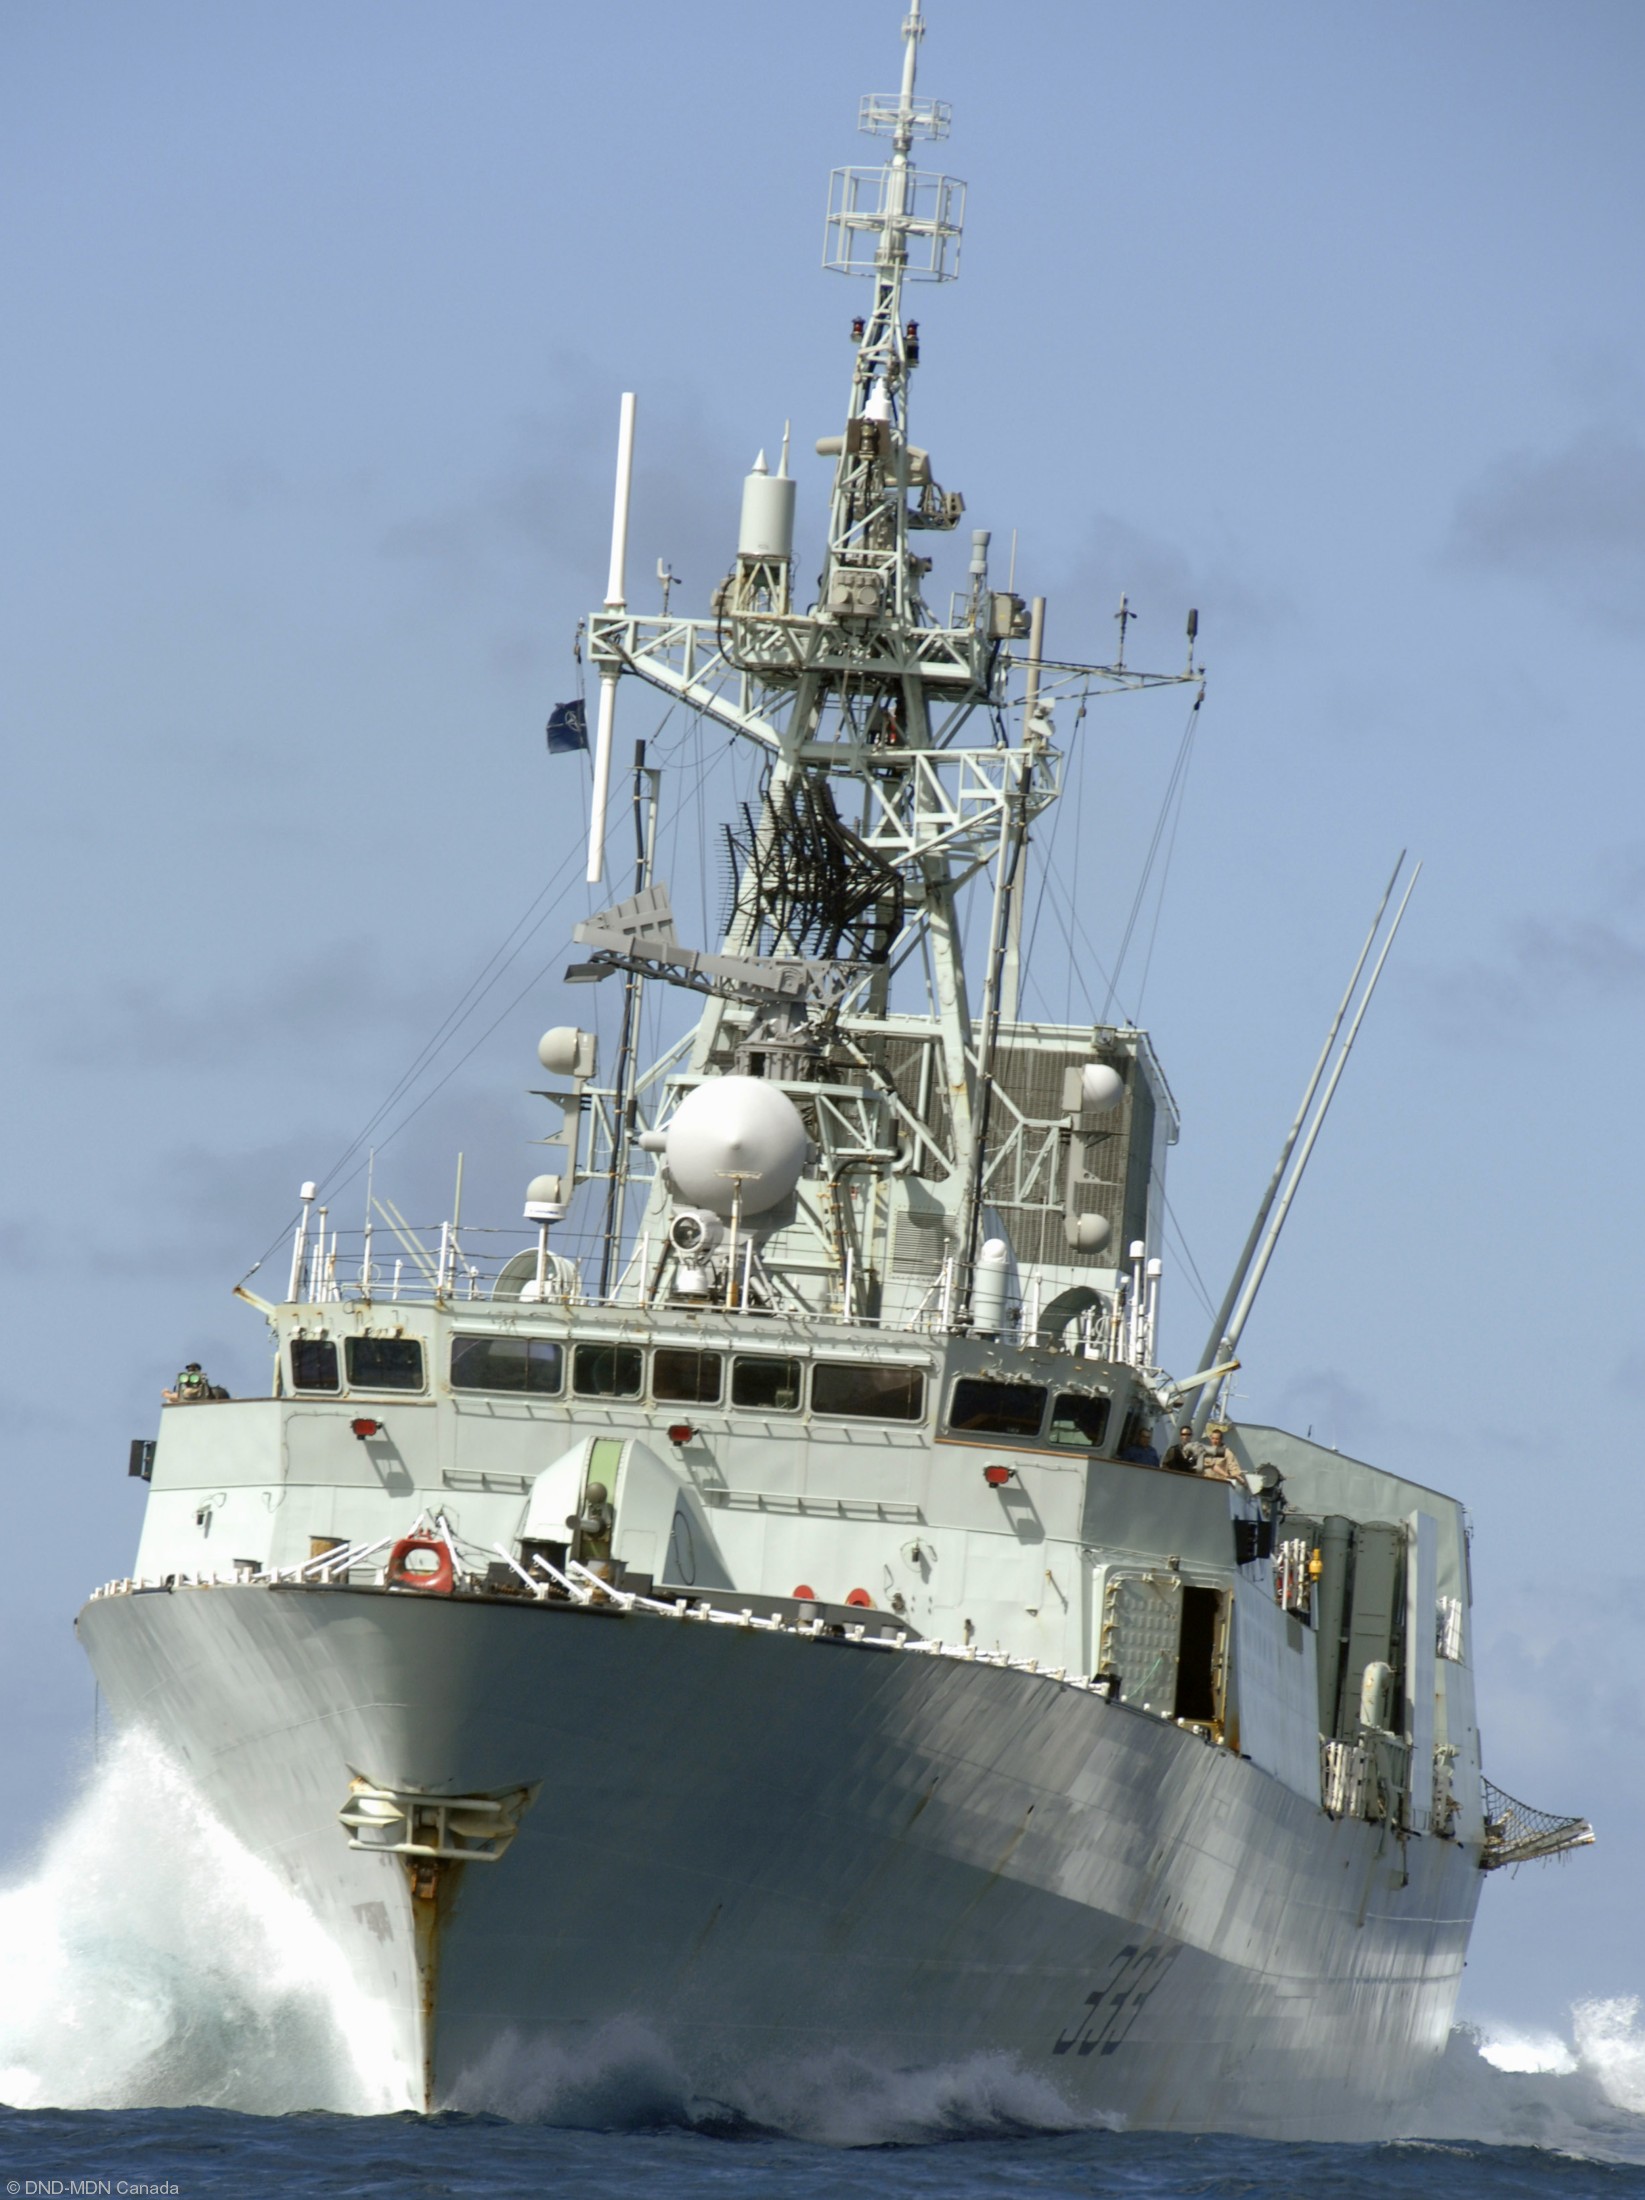 ffh-333 hmcs toronto halifax class helicopter patrol frigate ncsm royal canadian navy 58